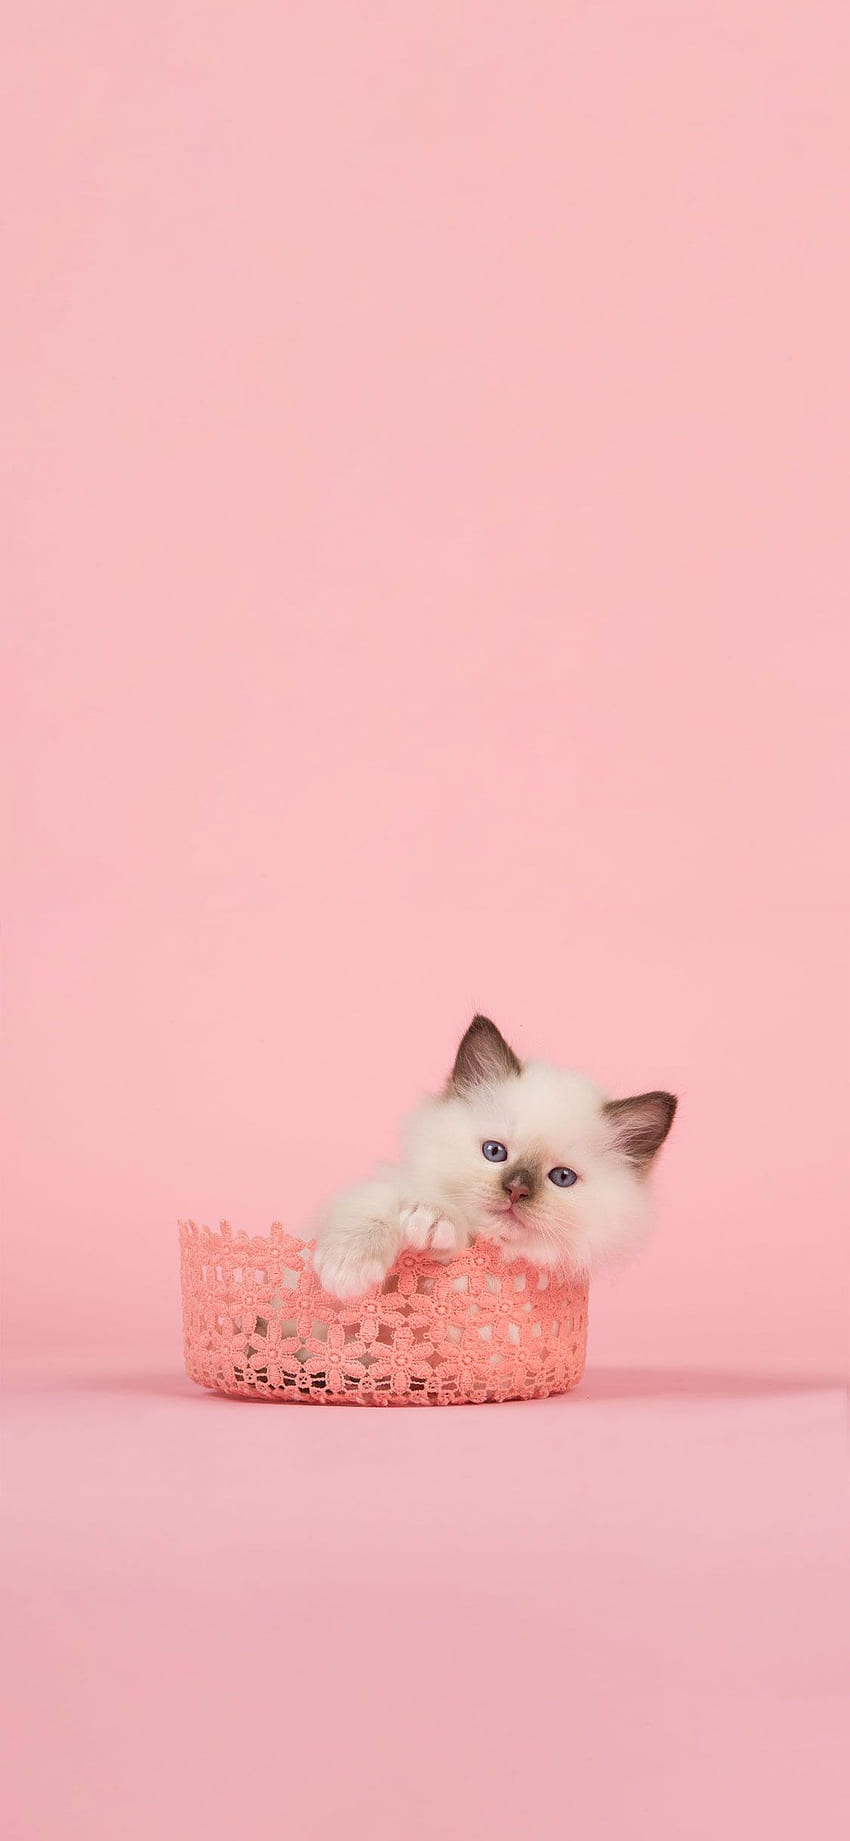 76+] Pink Hello Kitty Wallpaper - WallpaperSafari